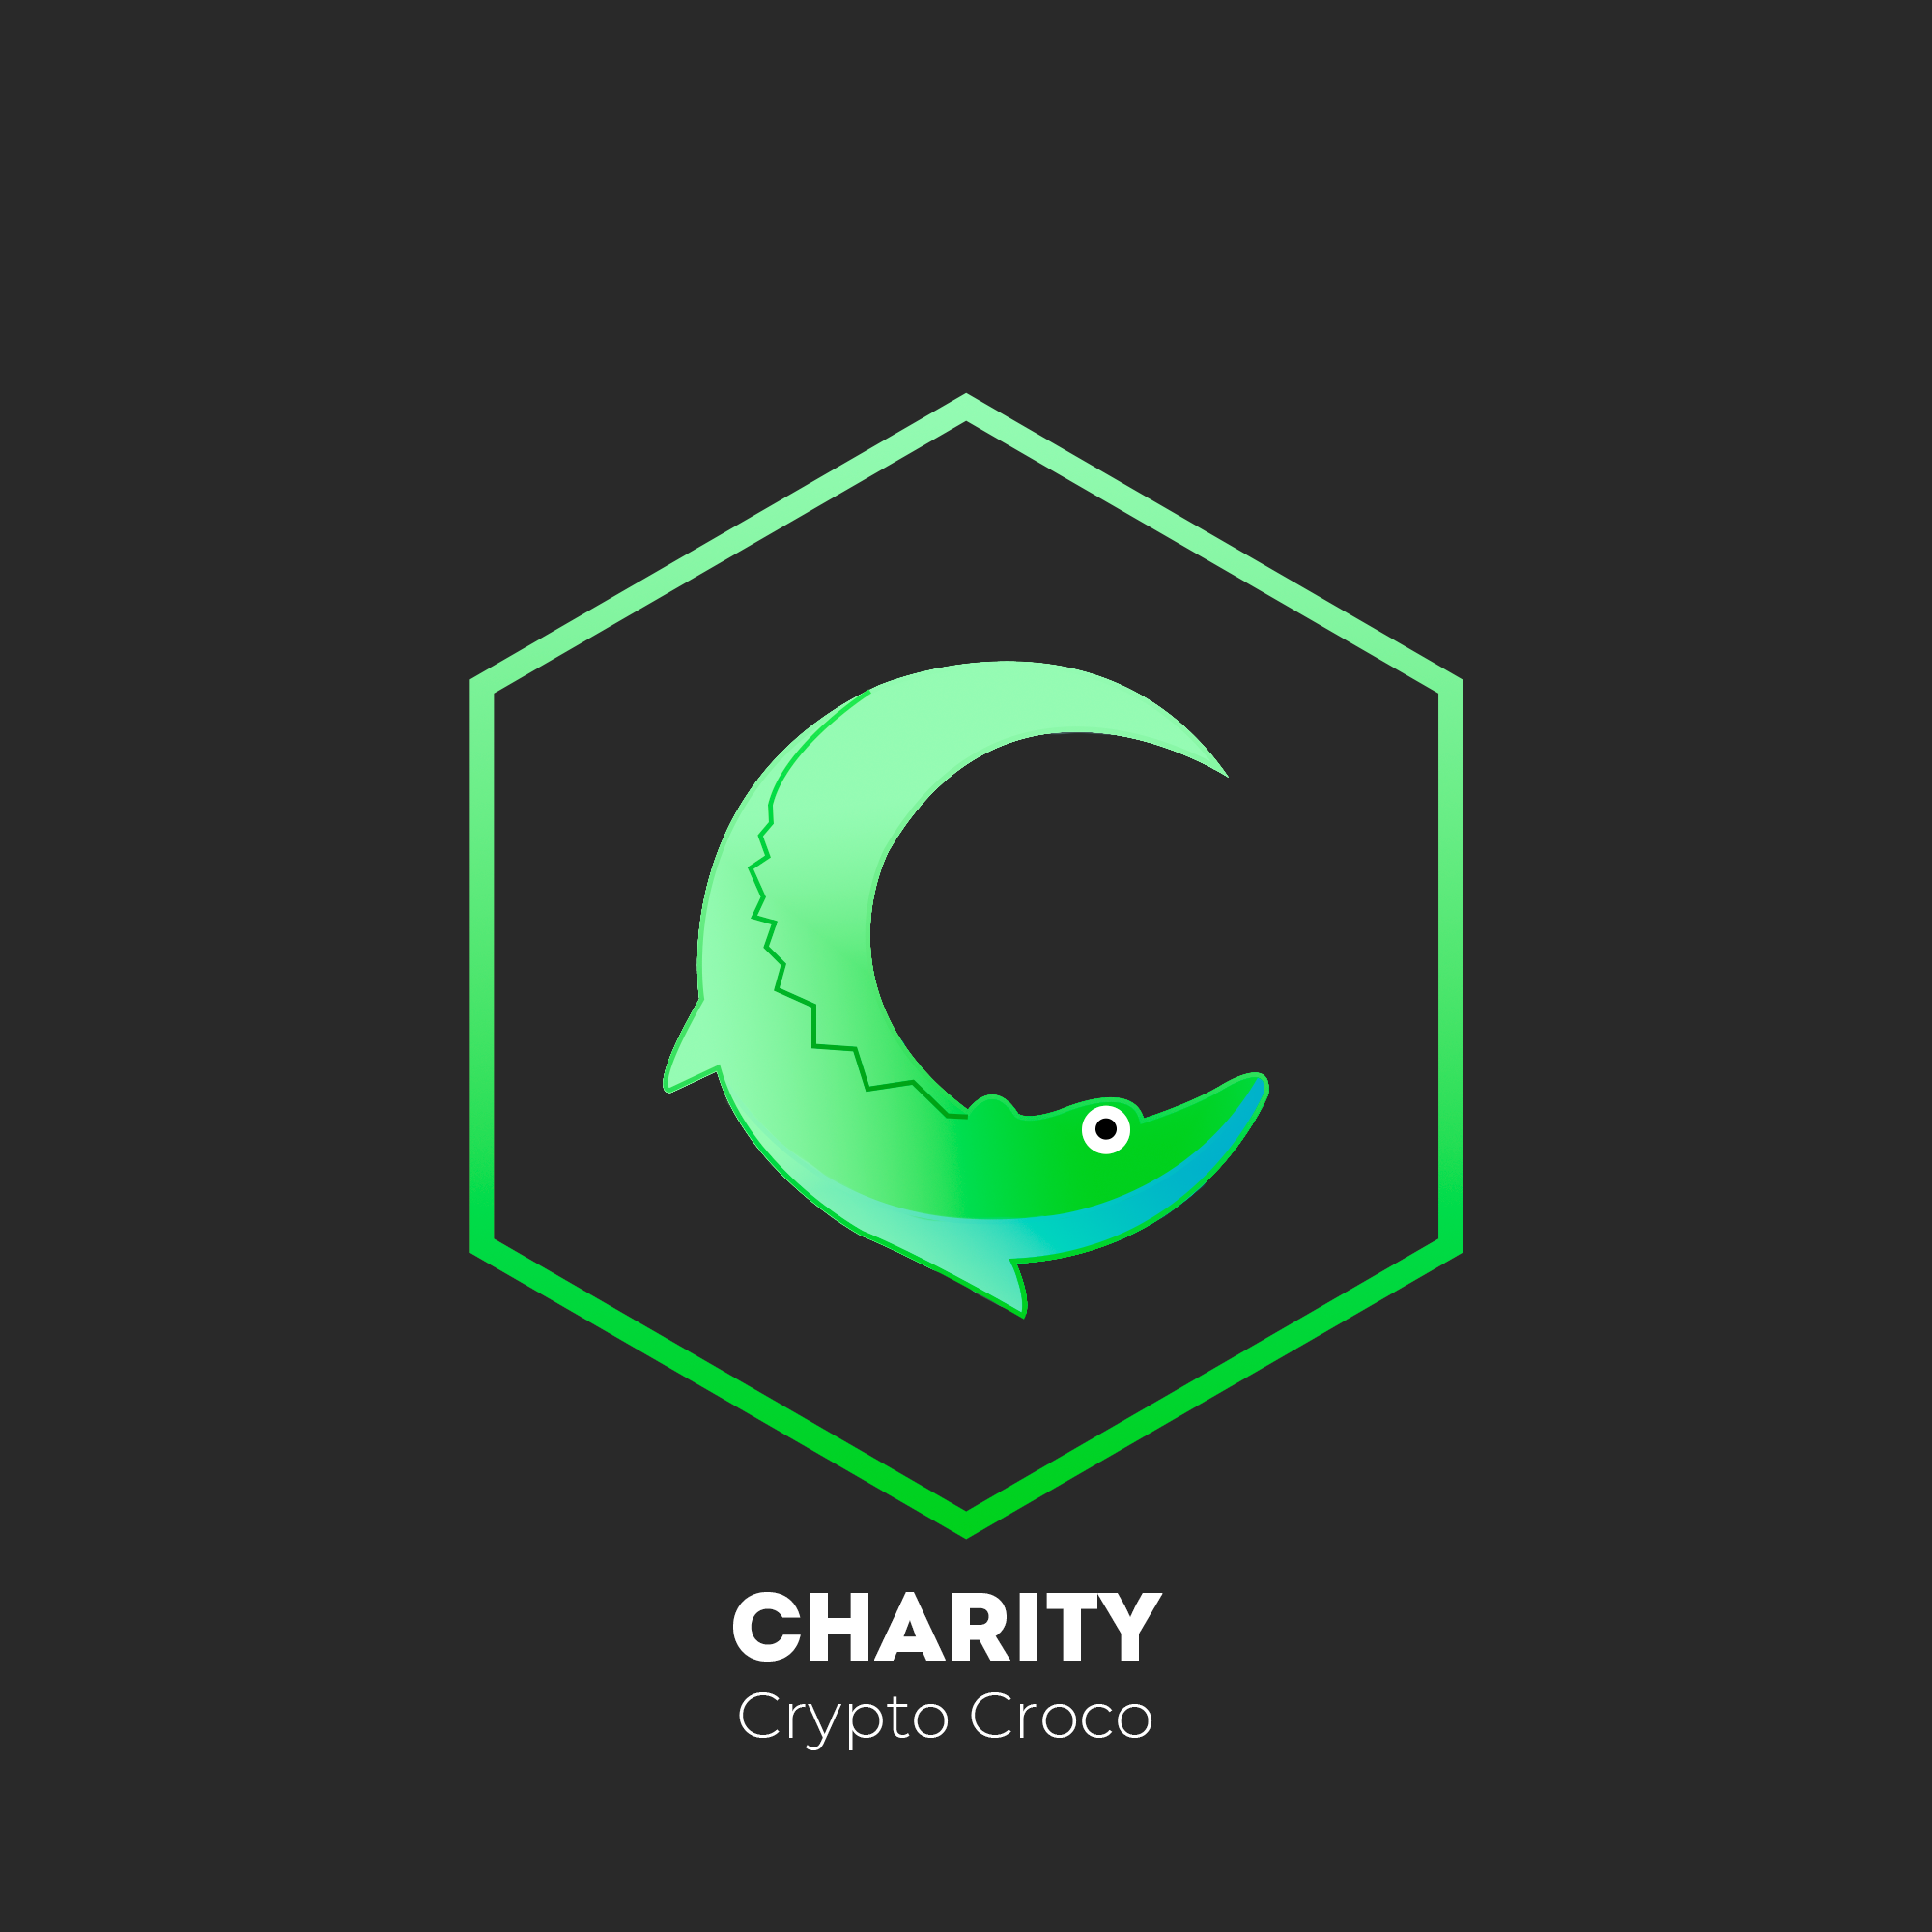 Charity Crypto Croco